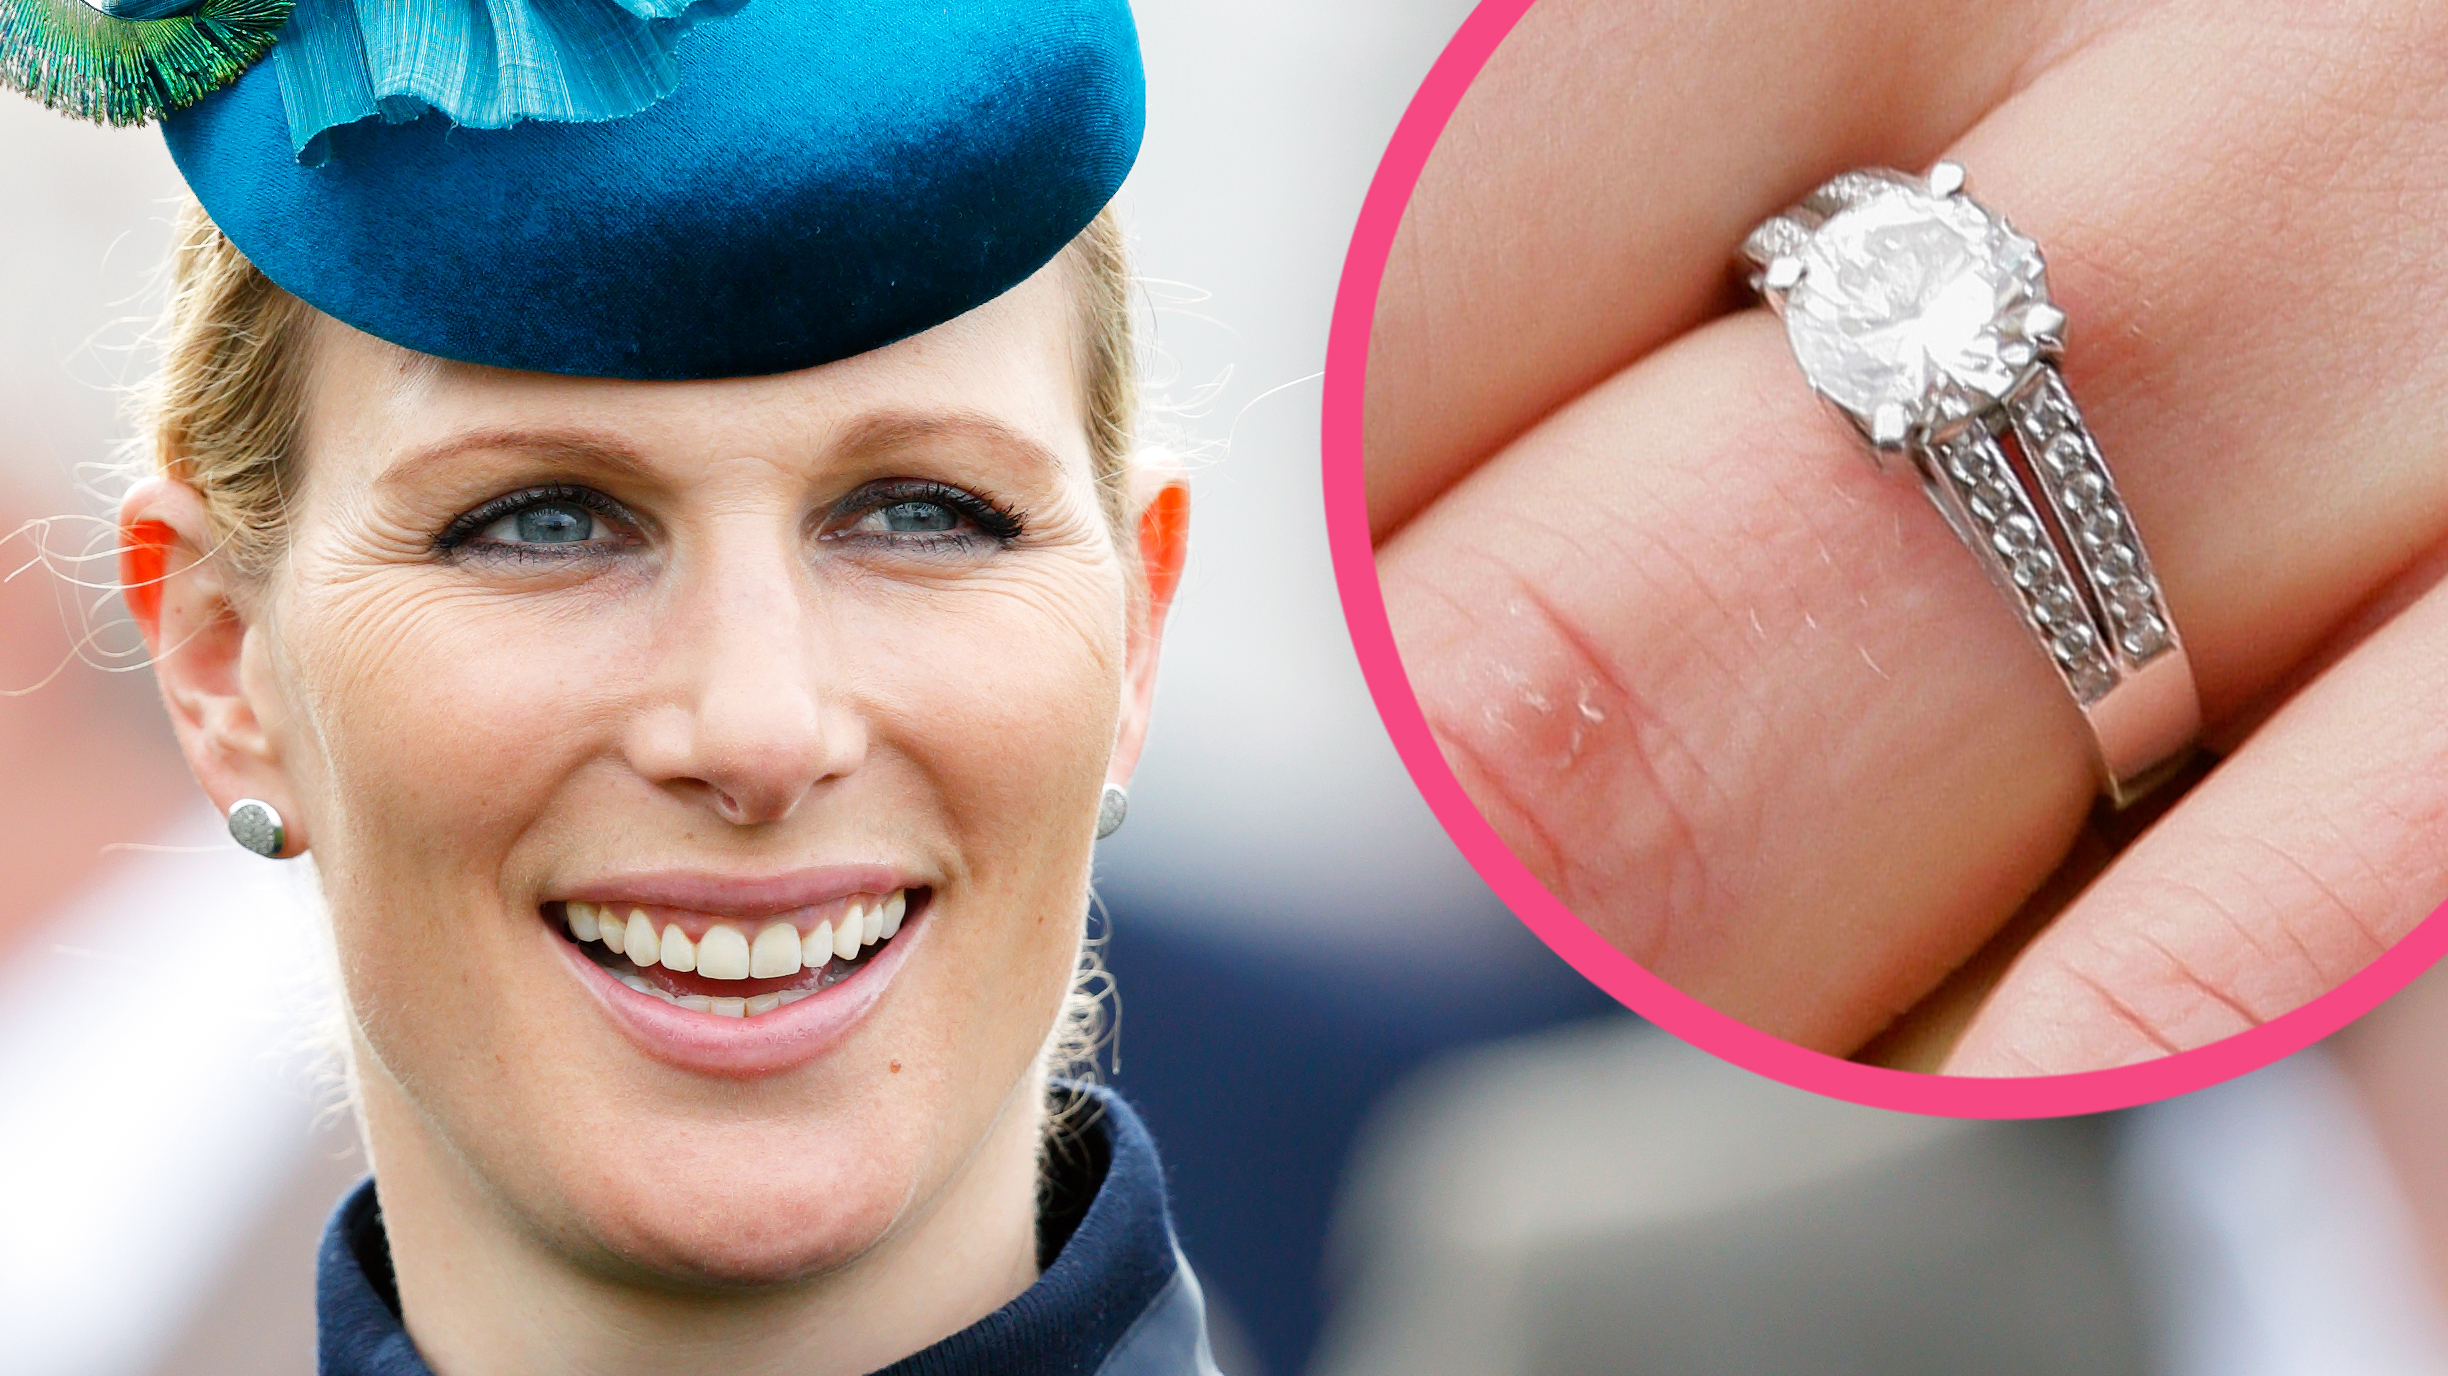 Royal engagement ring costs: Zara Tindall's diamond, Princess